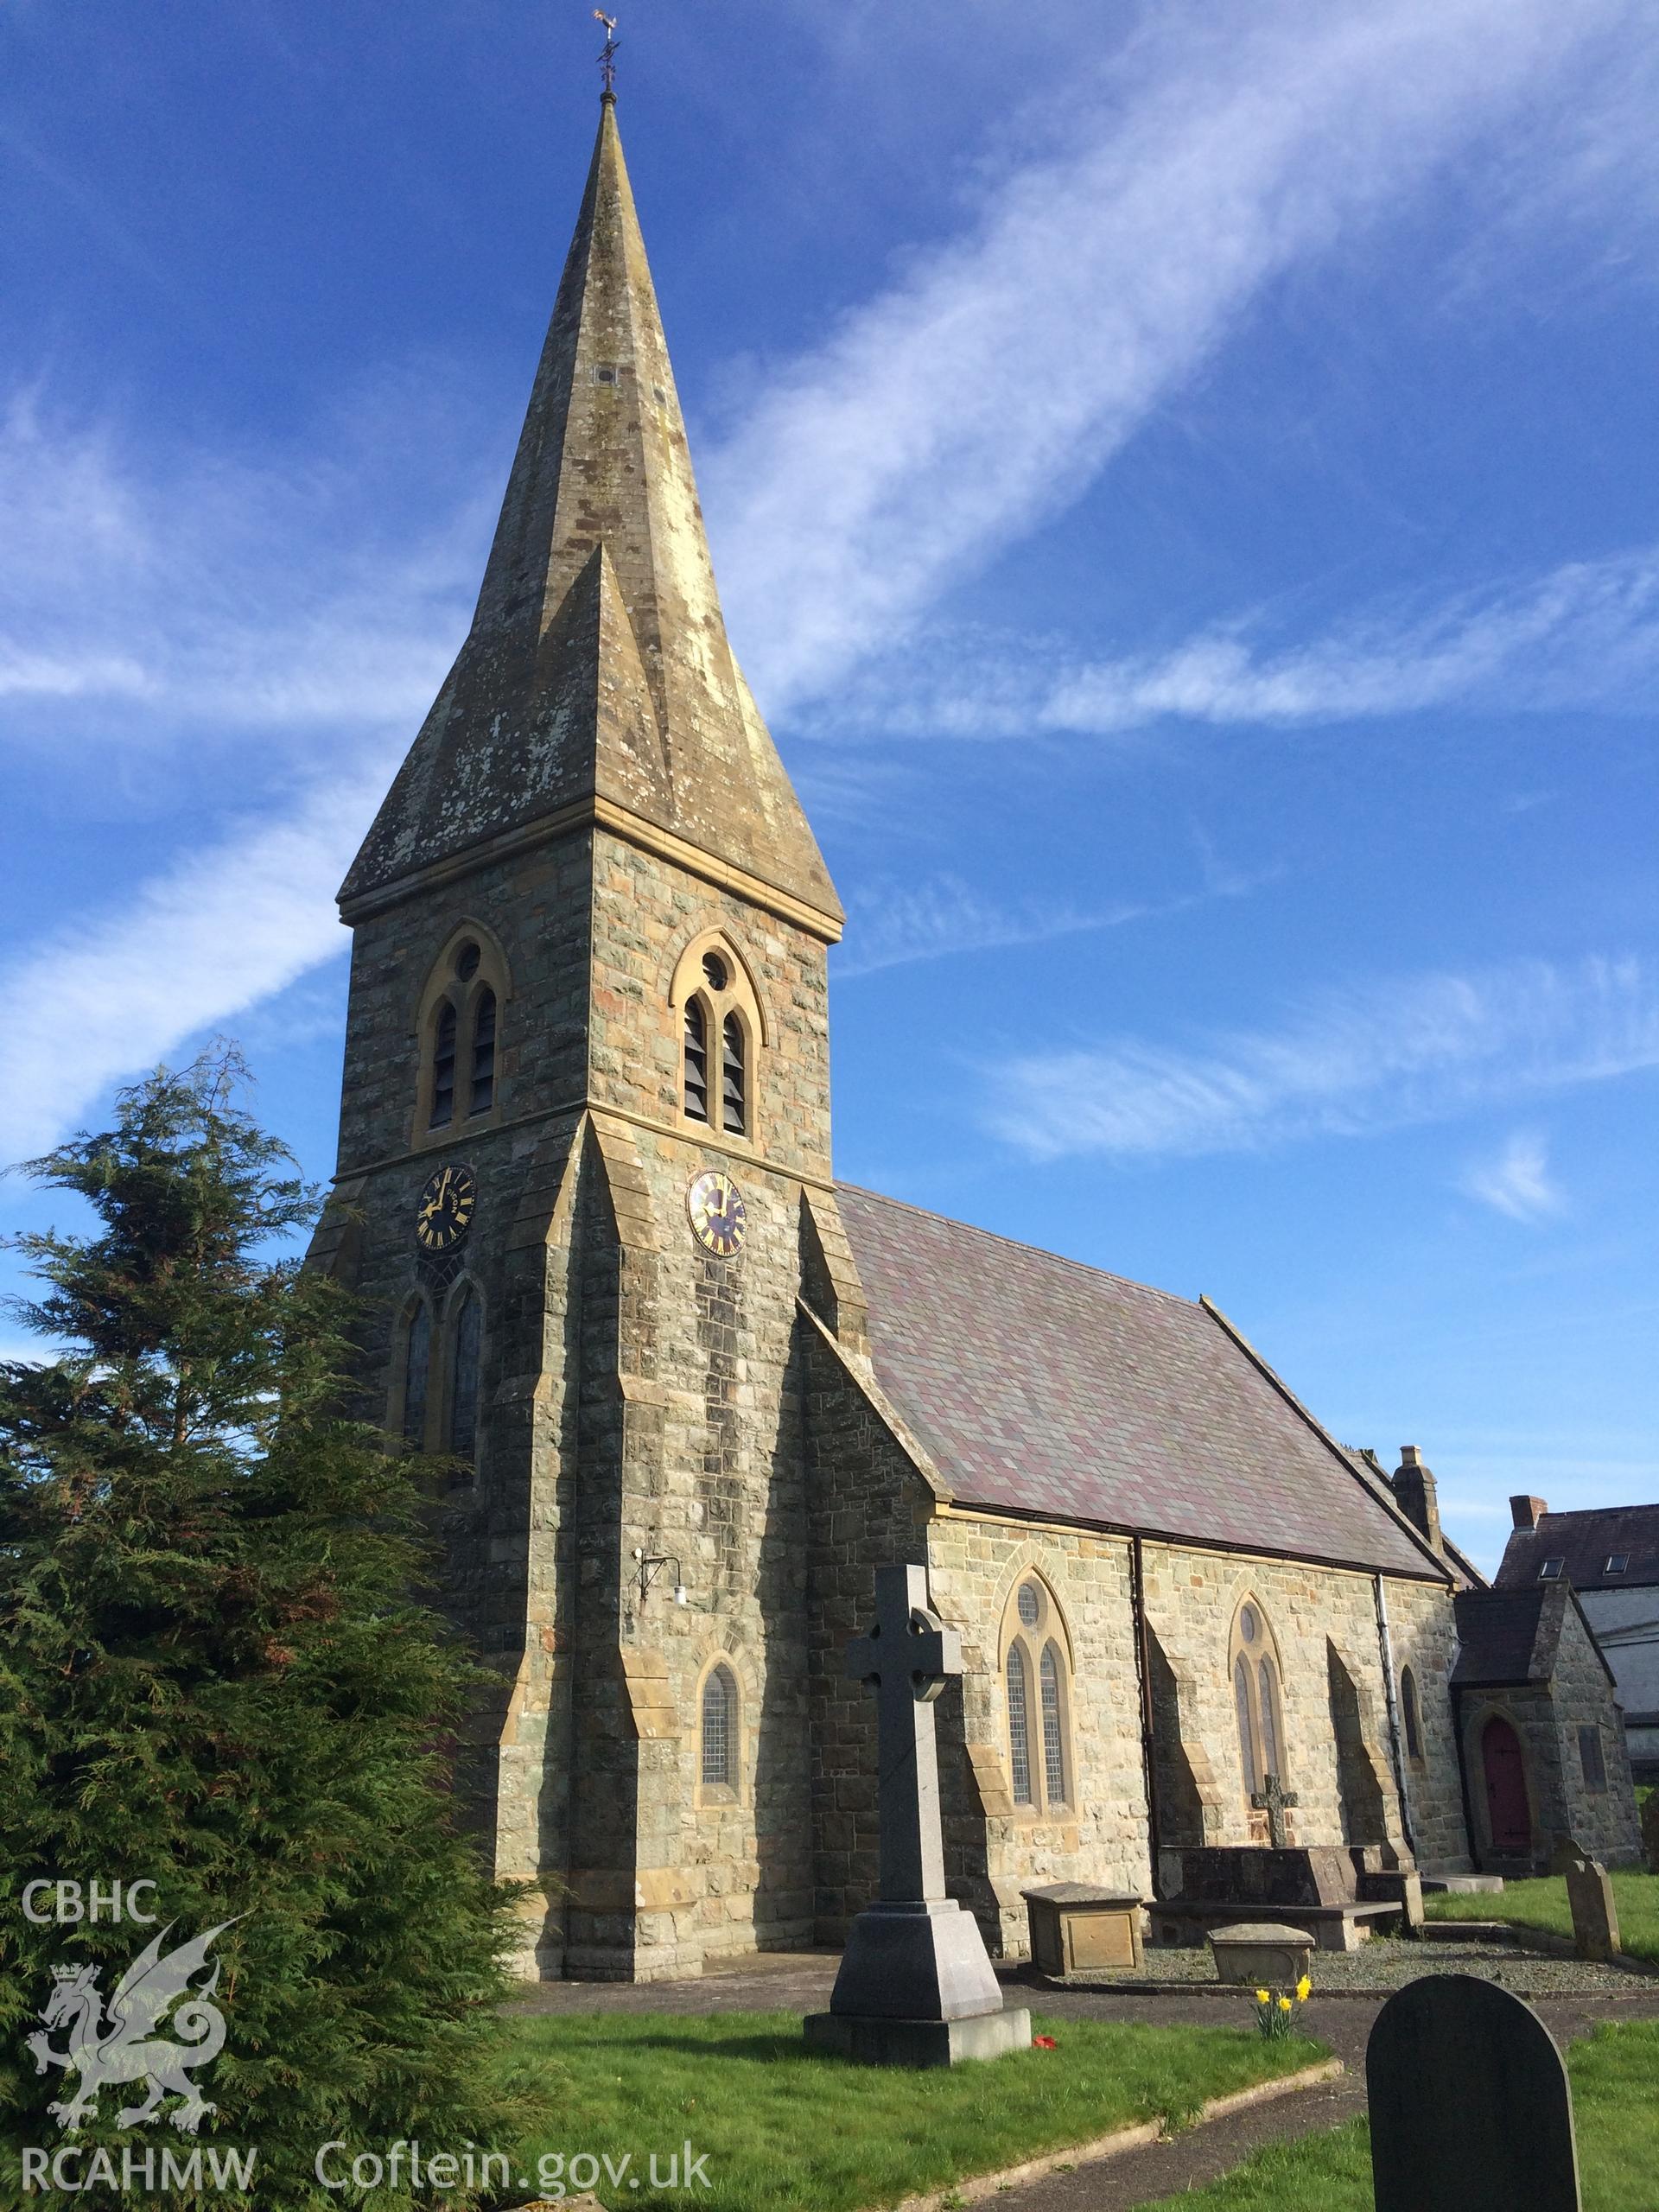 Colour photo showing Castle Caereinion Church, produced by Paul R. Davis, 25th March 2017.